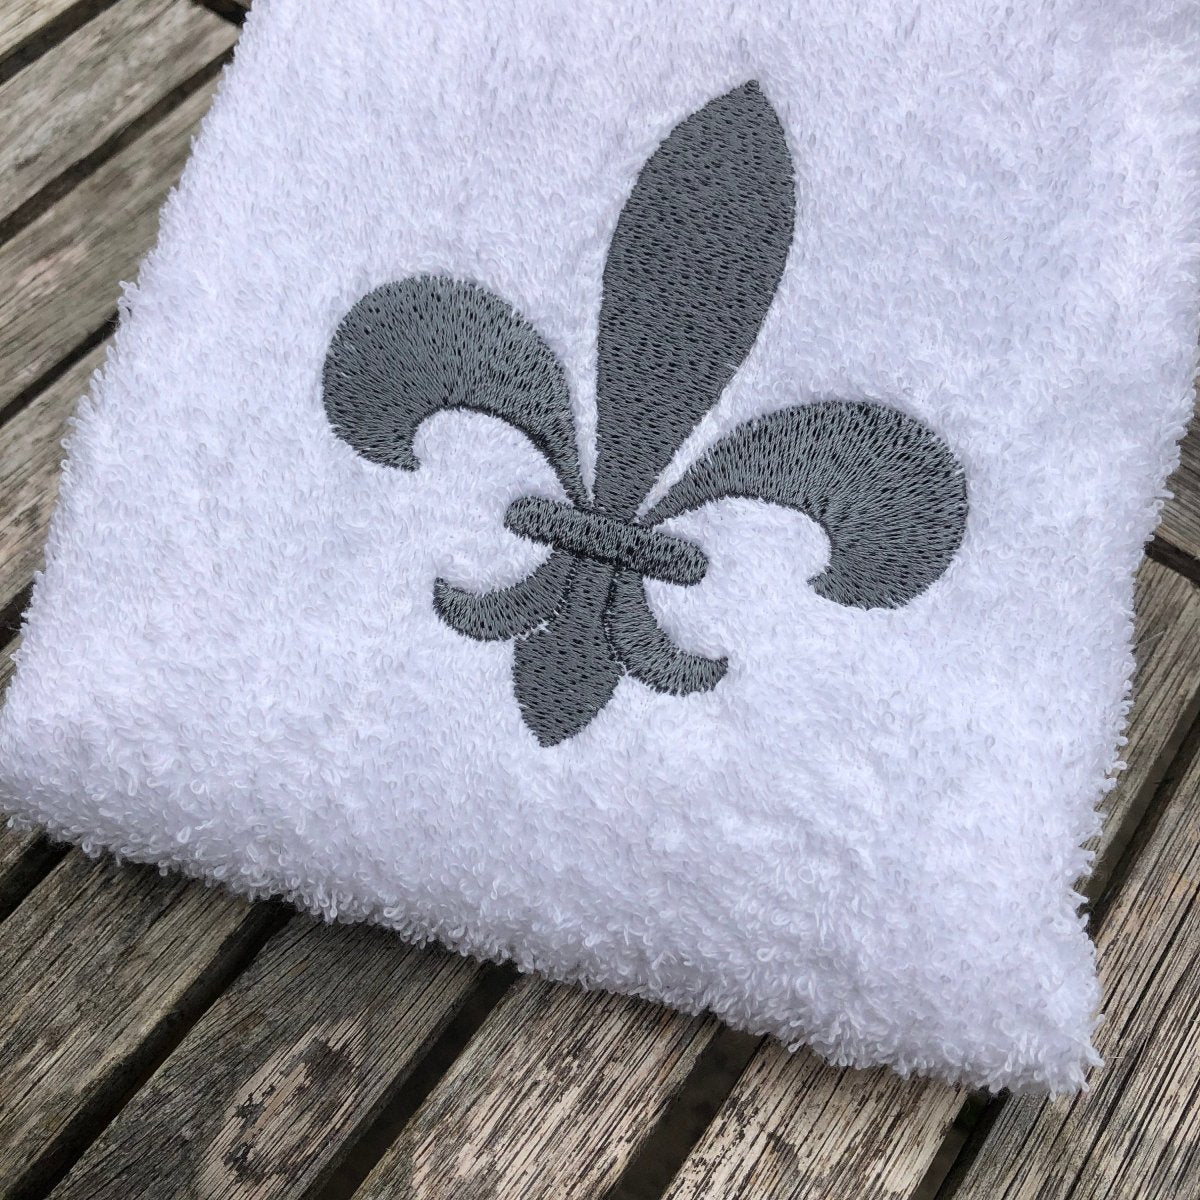 Italian Army White Terry Cloth Hand Towel